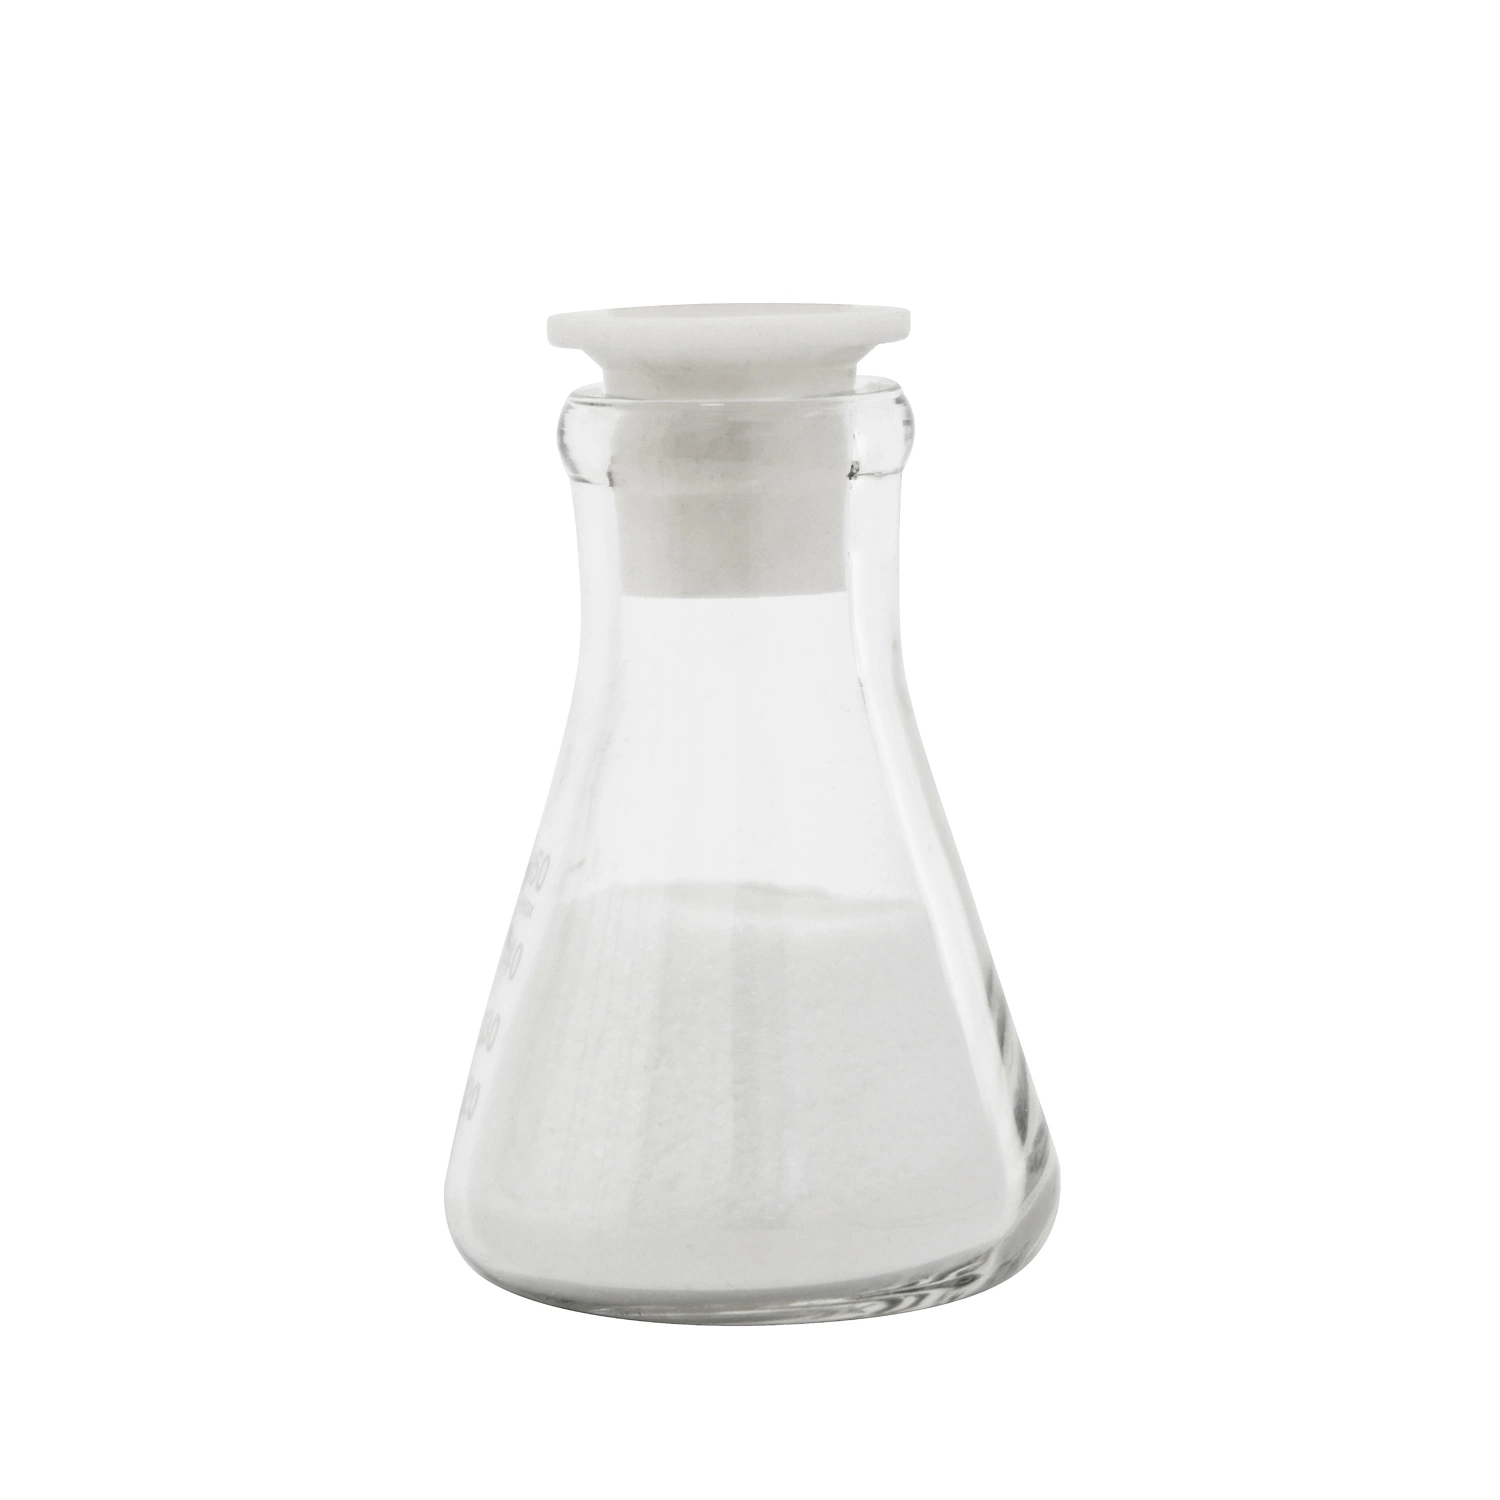 Factory Supply Pipes Disodium Salt Pipes-2na Piperazine-1, 4-Bis 2-E Thanesulfonic Acid Disodium Salt